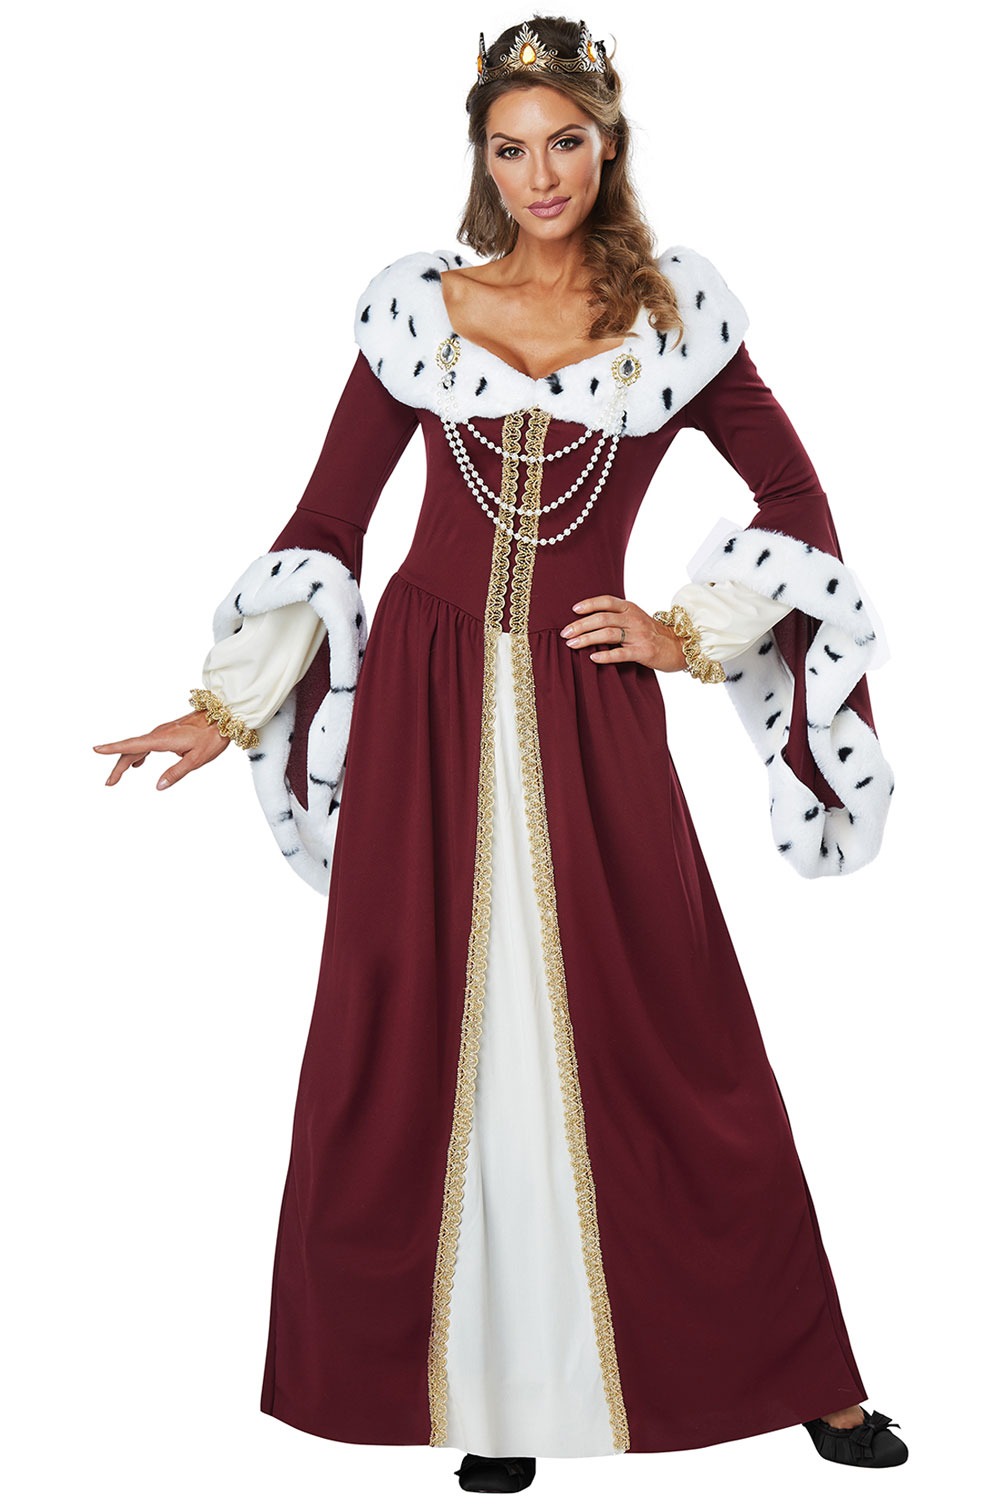 Queen Victoria Halloween Costume | vlr.eng.br